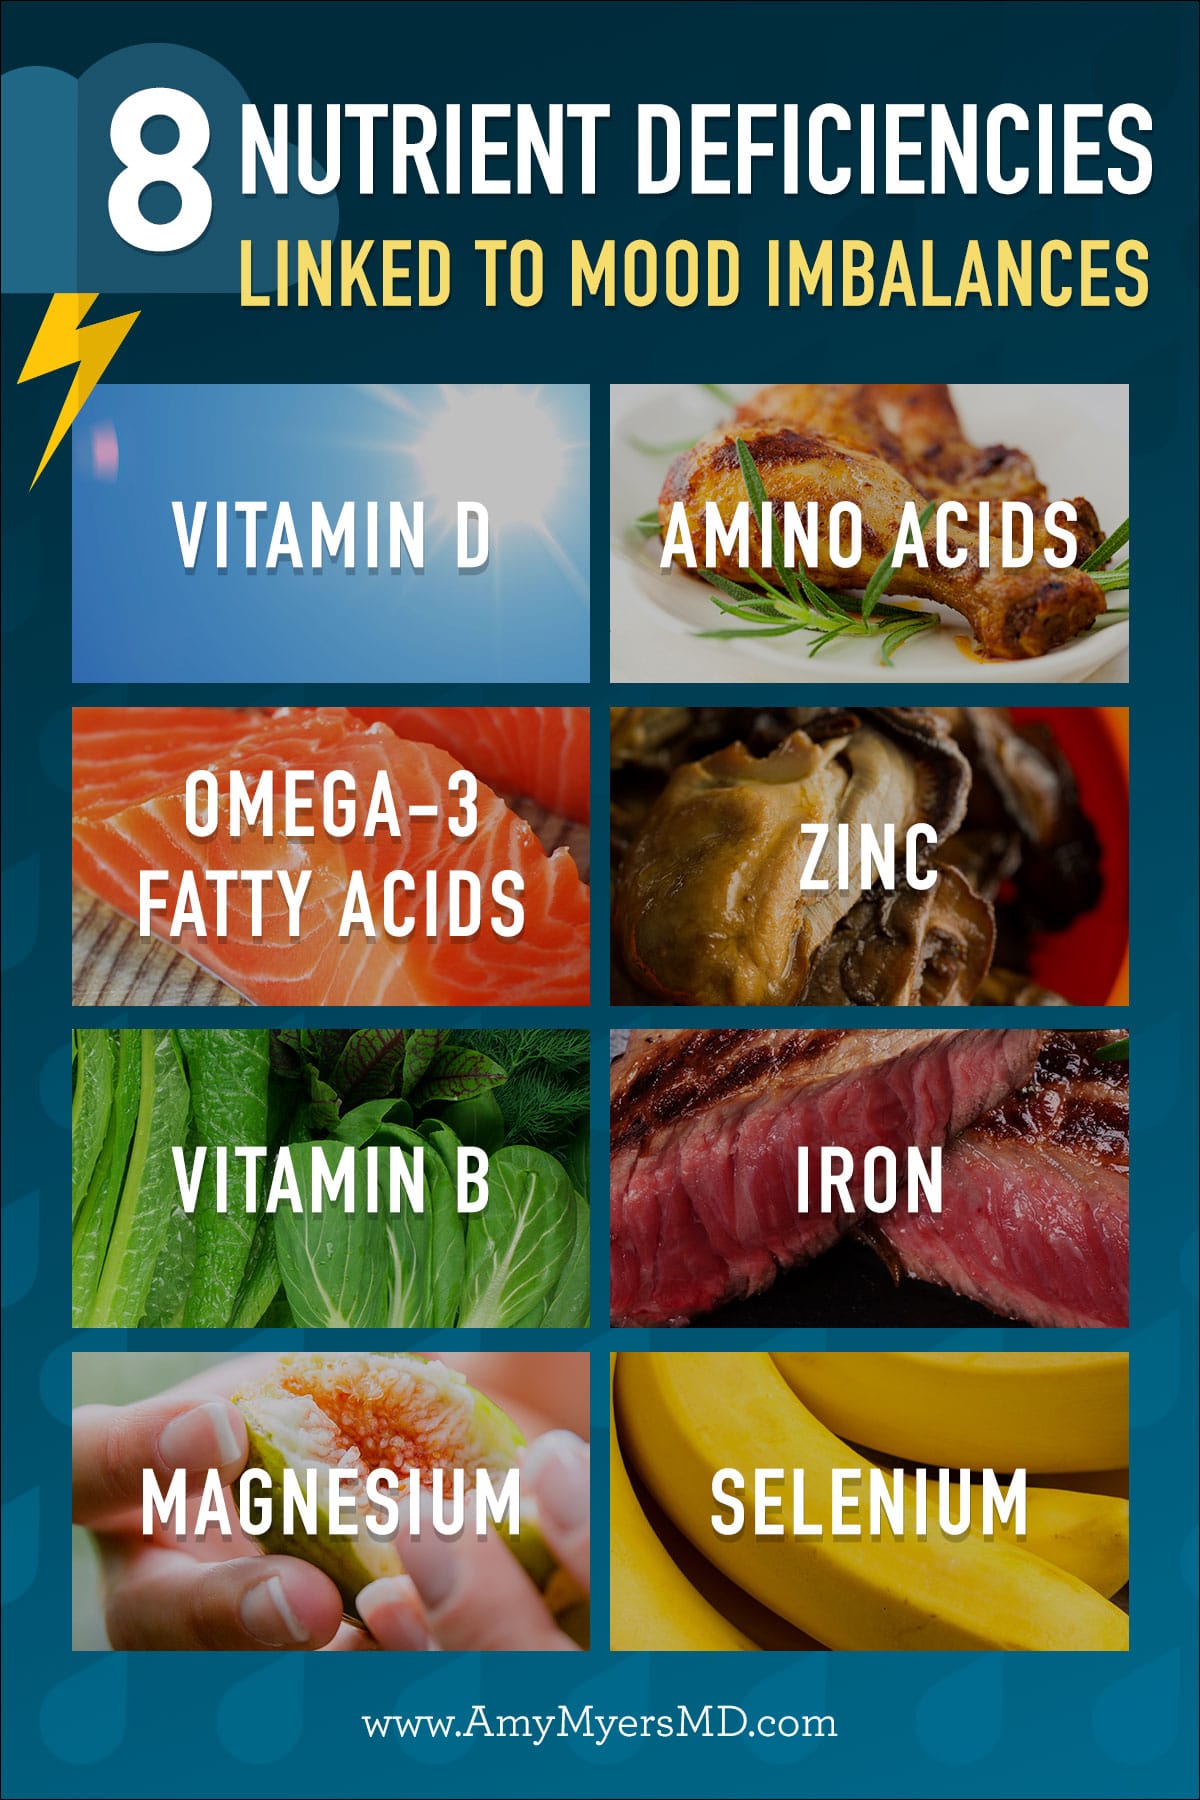 8 Nutrient Deficiencies Linked to Mood Imbalances